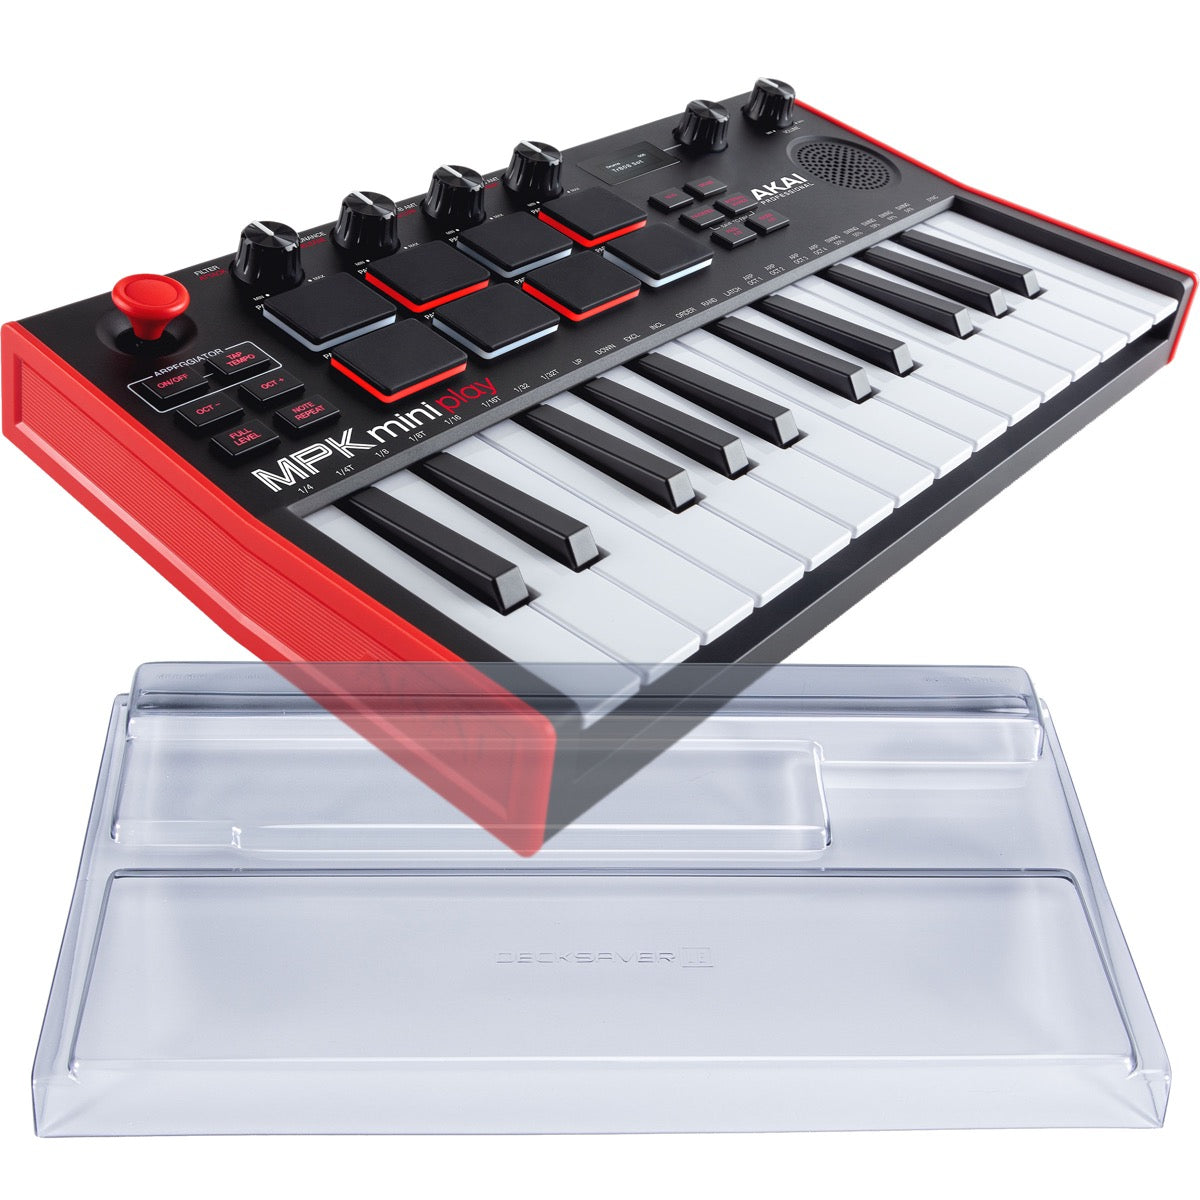 Akai Professional MPK Mini Play Mk3 Keyboard with Built-In Speaker 